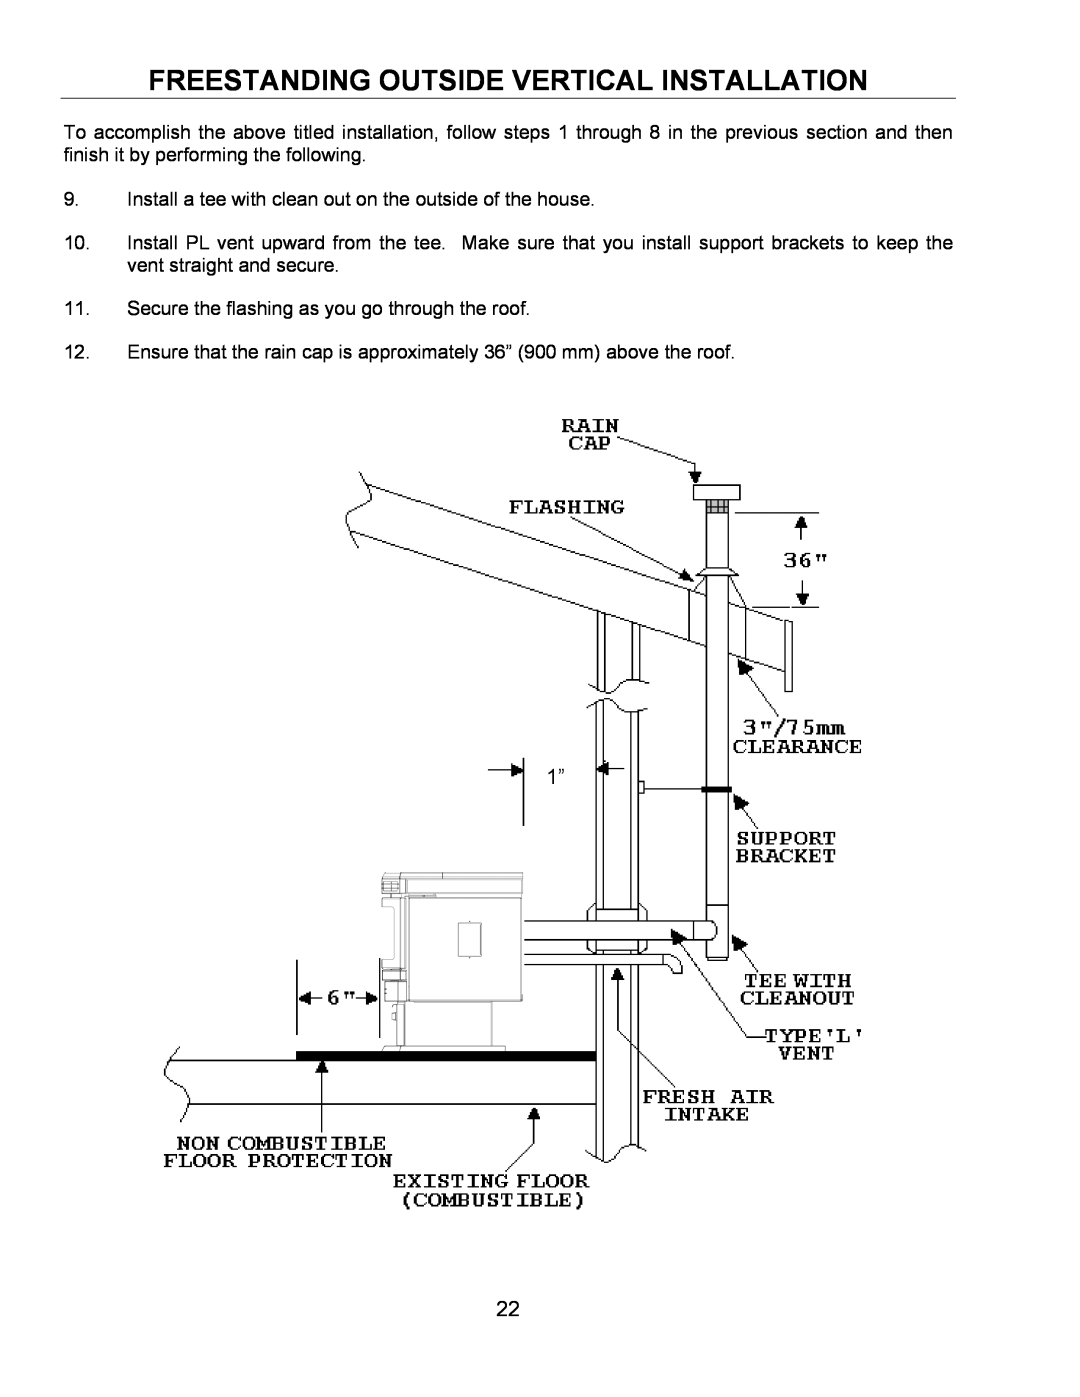 Sherwood EF-3 BAYI technical manual Freestanding Outside Vertical Installation 